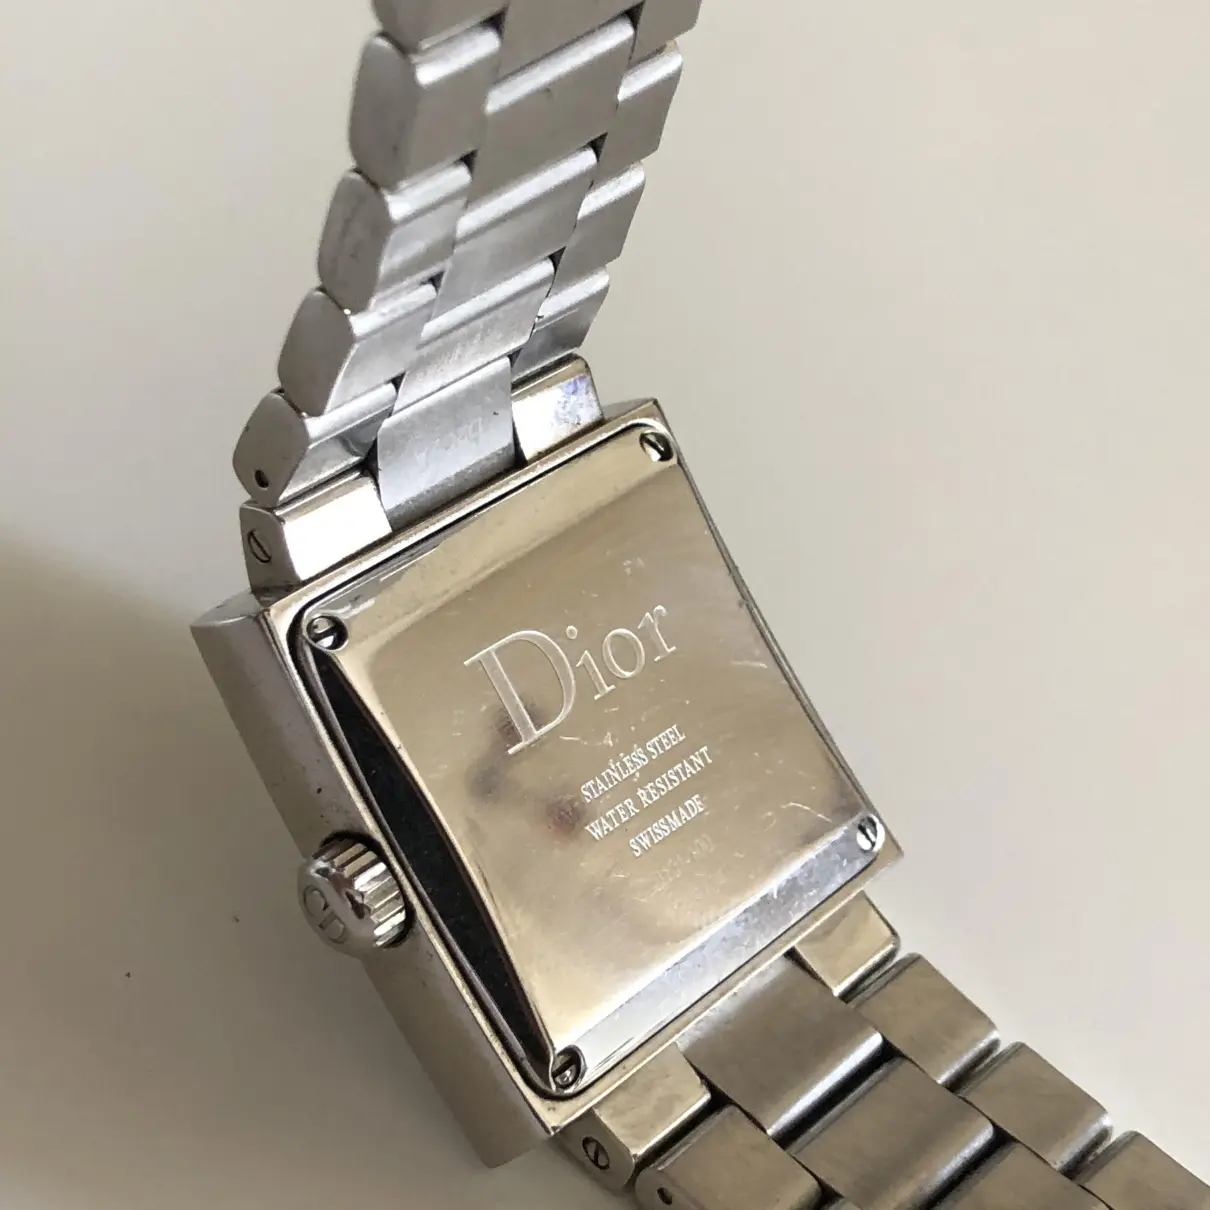 Buy Dior Watch online